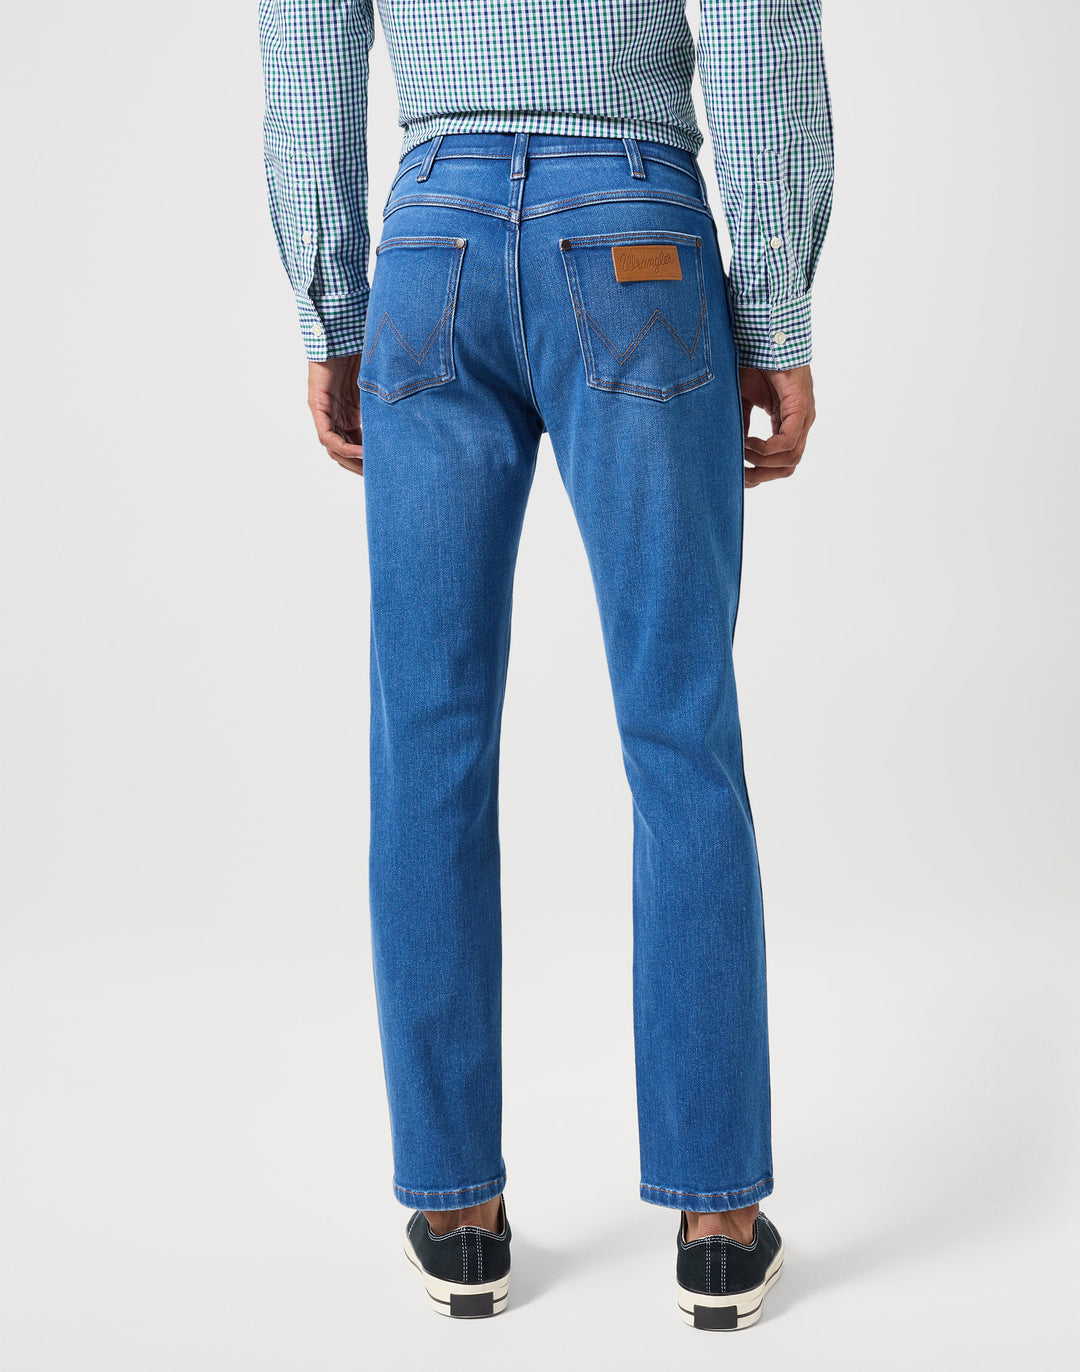 Wrangler - Larston - Heren Slim-fit Jeans - Rustic